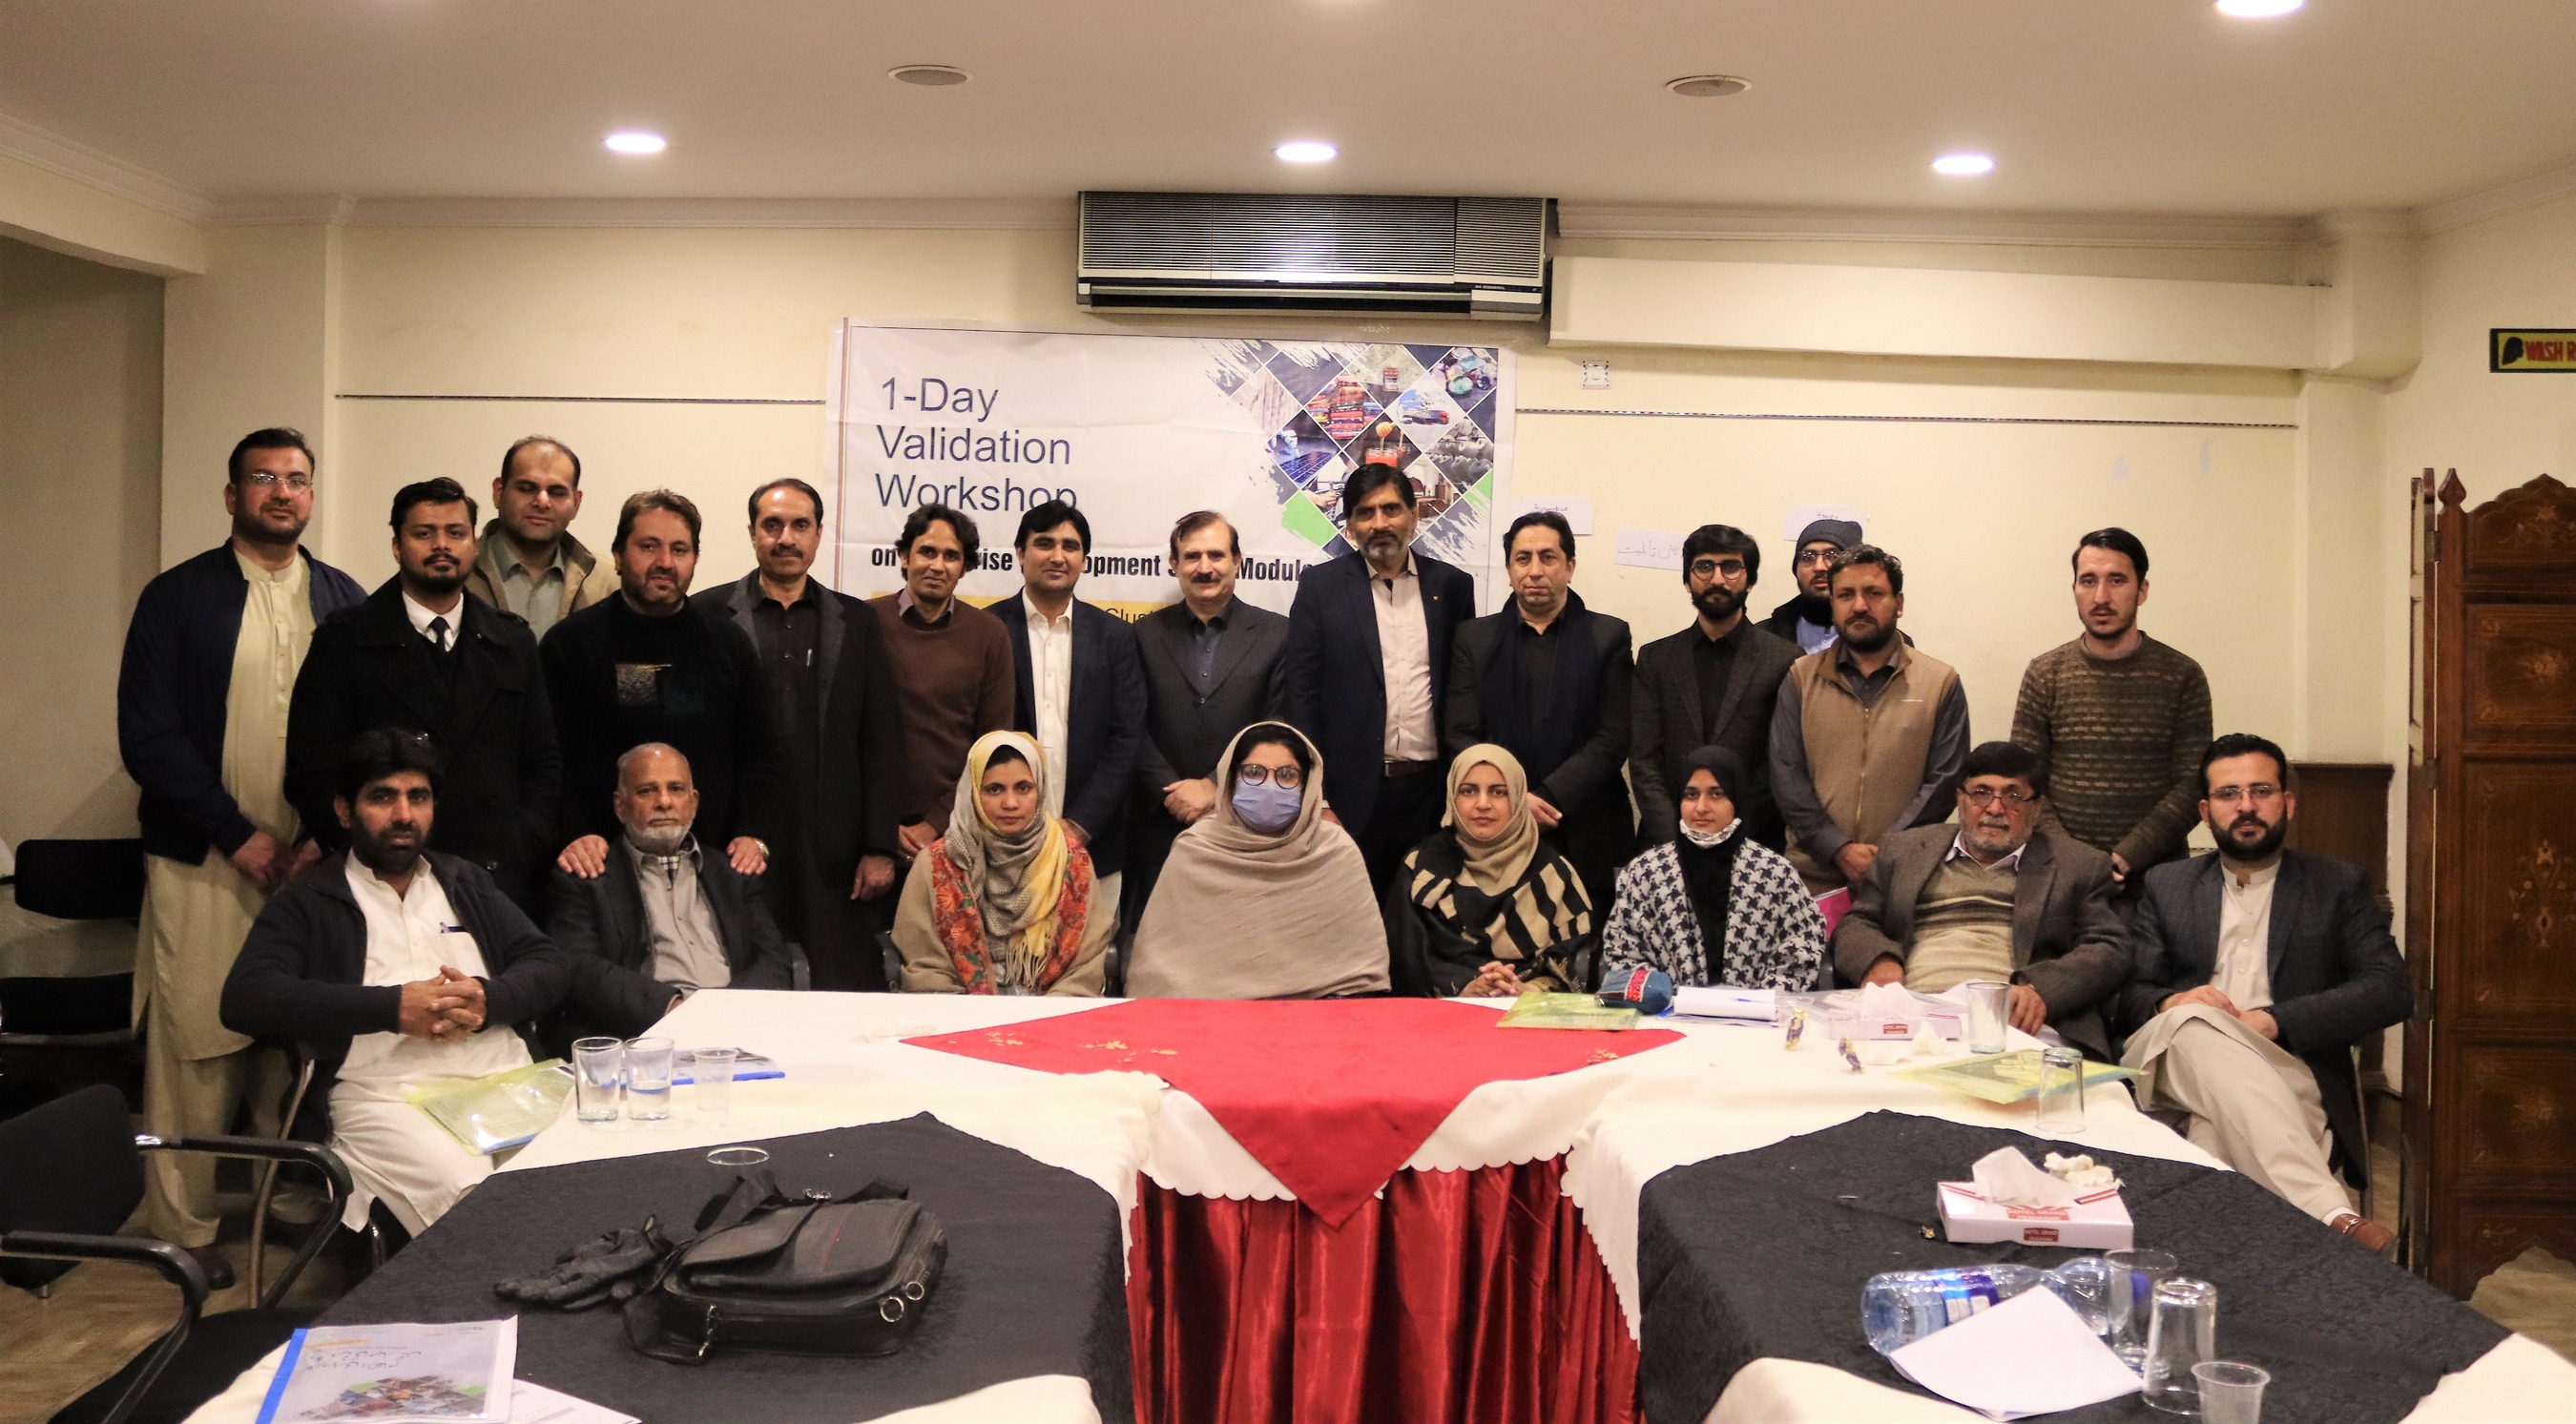 Module Validation workshops on enterprise development training for cluster in district Khyber and Peshawar